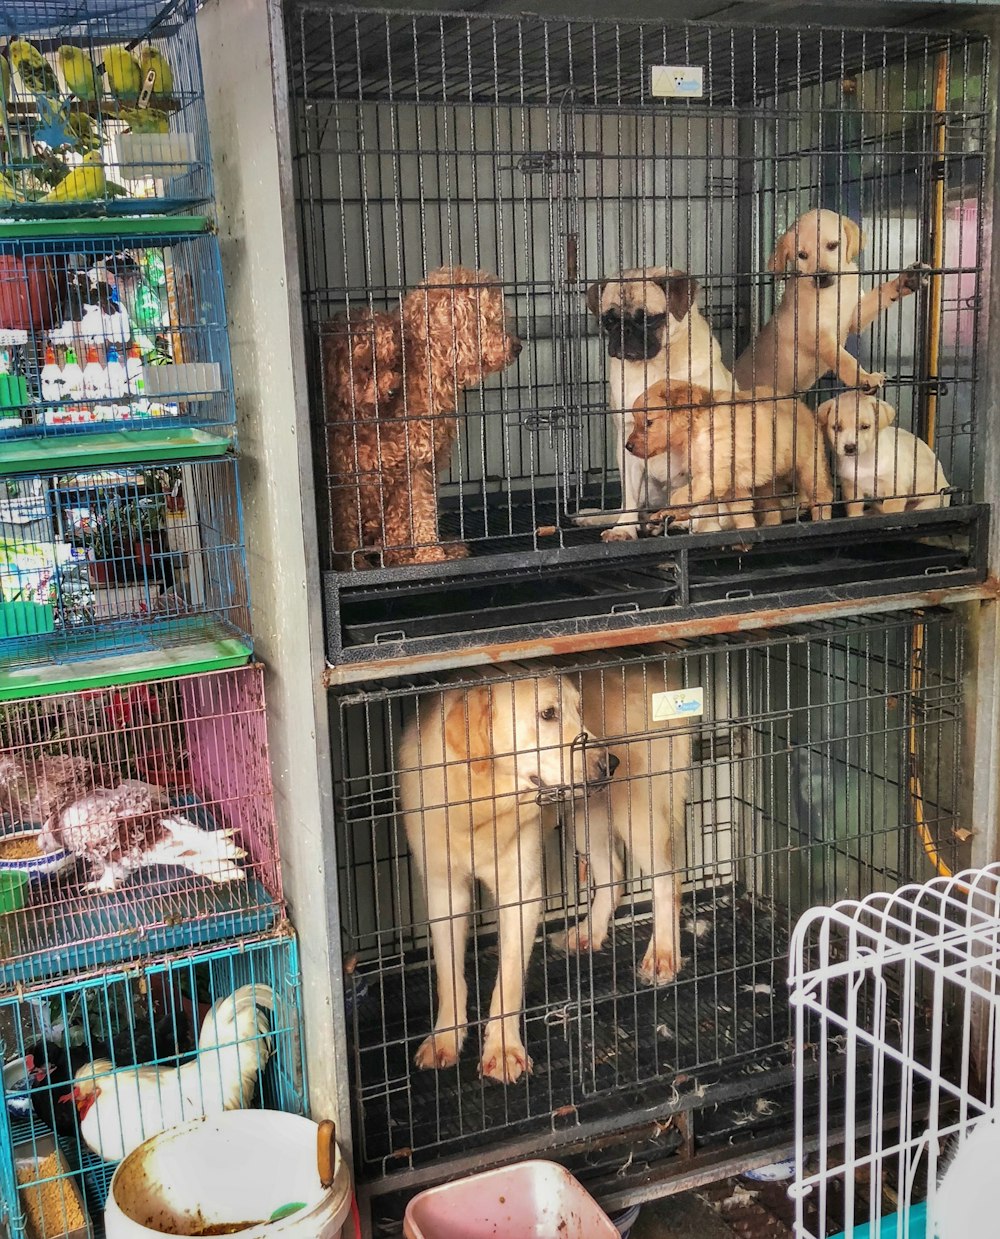 Un grupo de perros sentados dentro de jaulas